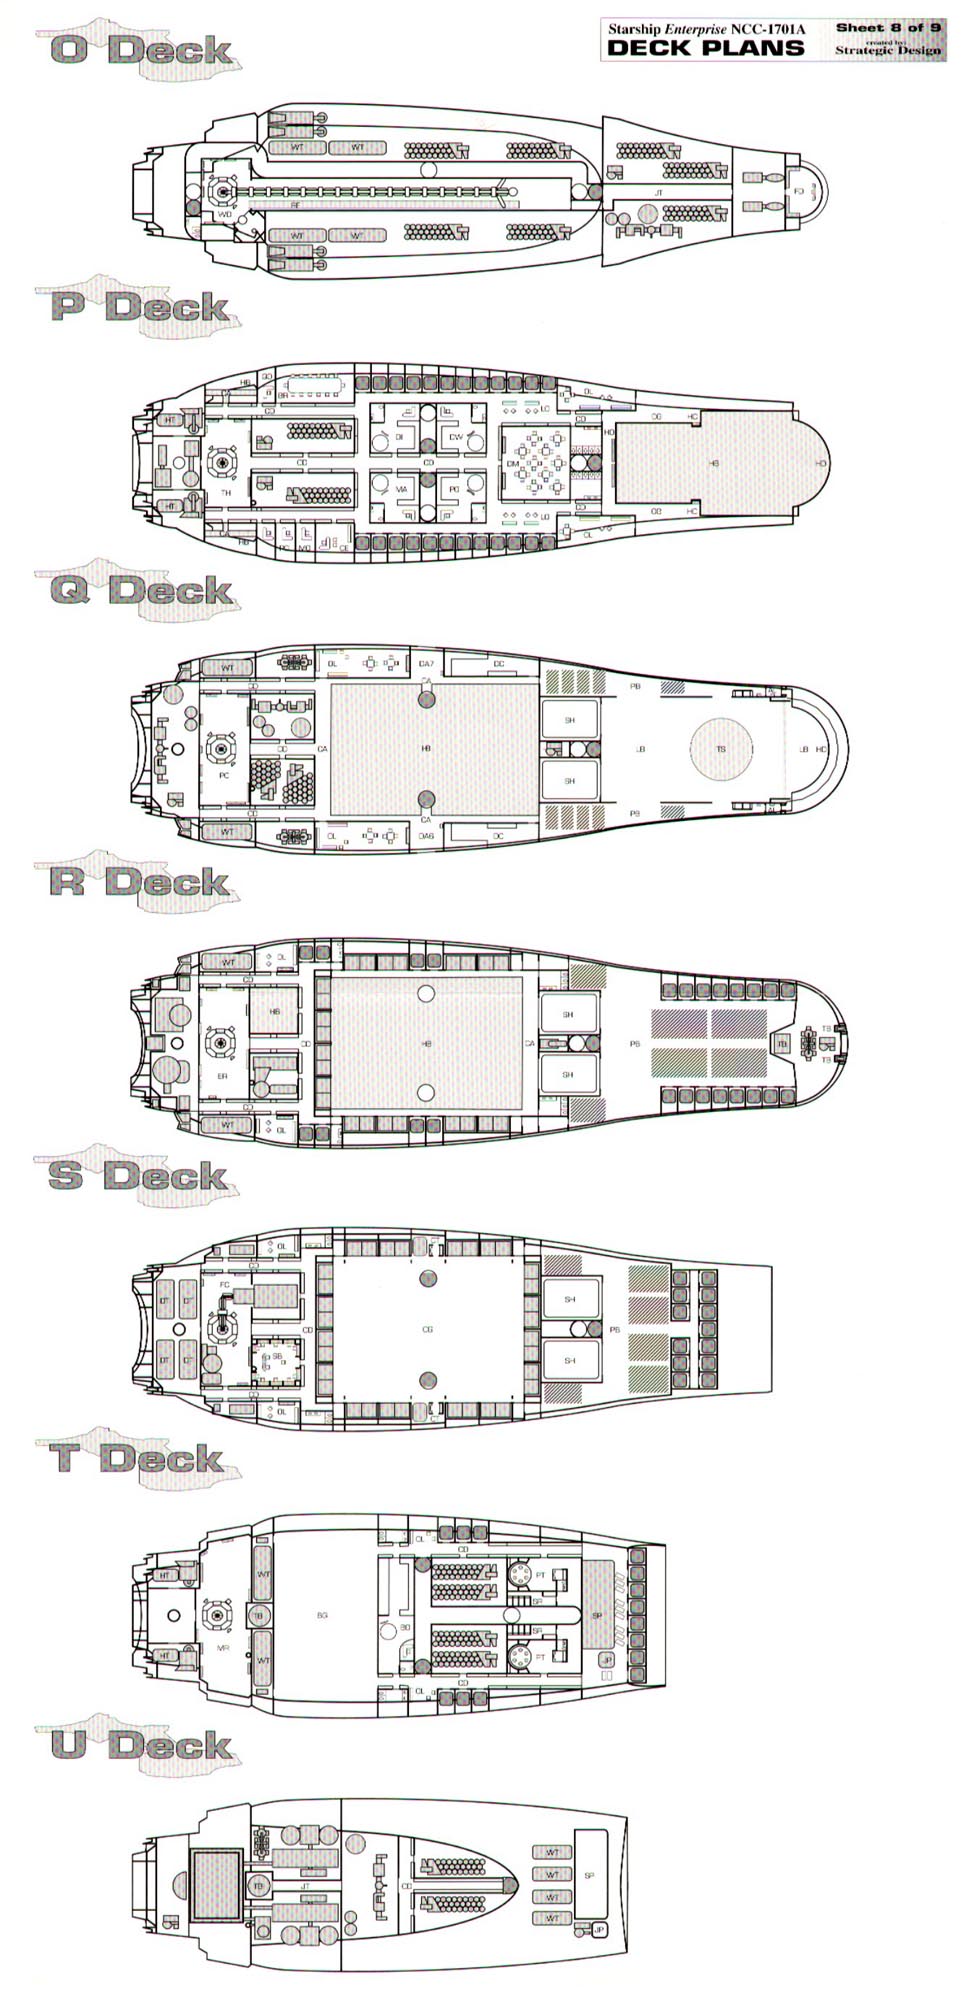 enterprise-deck-plans-sheet-8.jpg